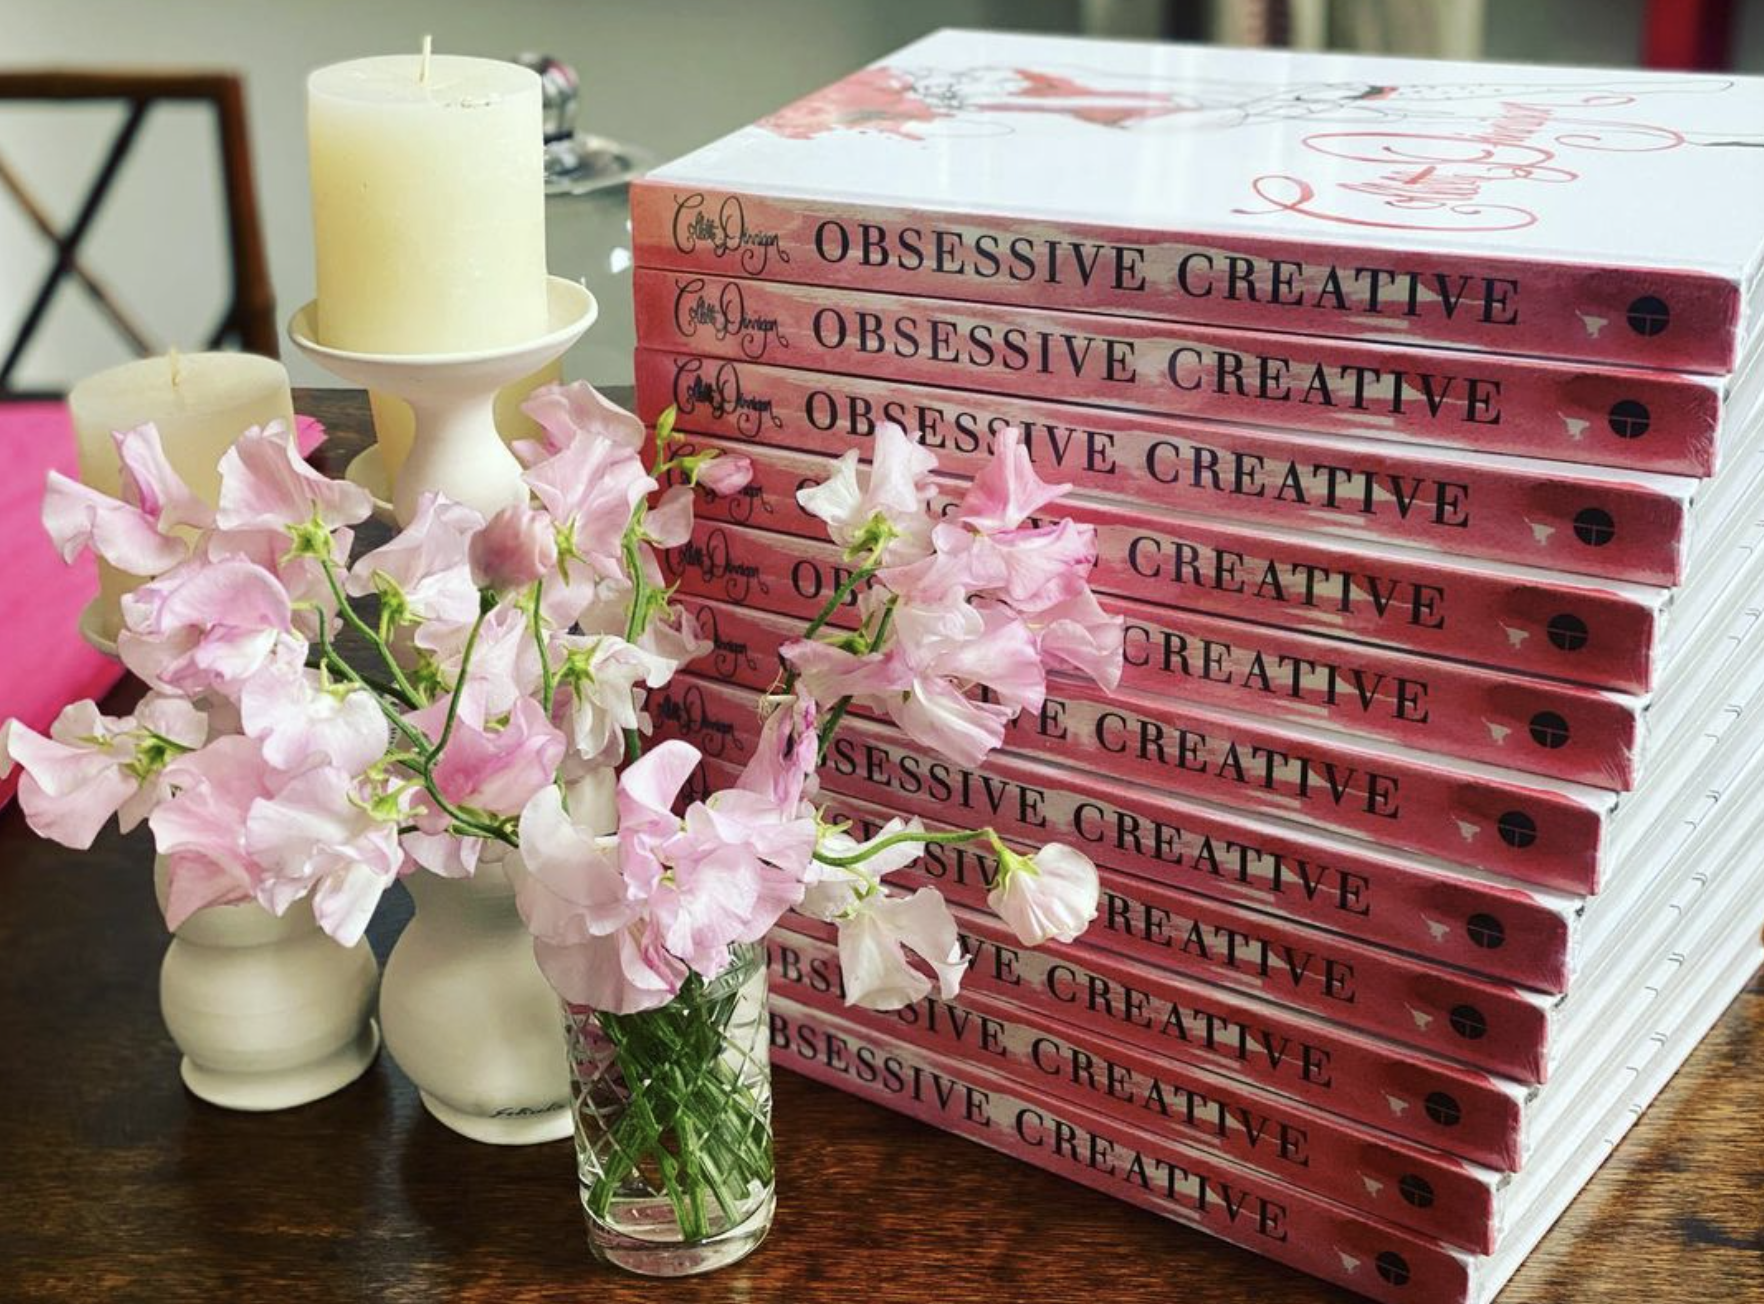 Books by Collette Dinnigan-Obsessive Creative